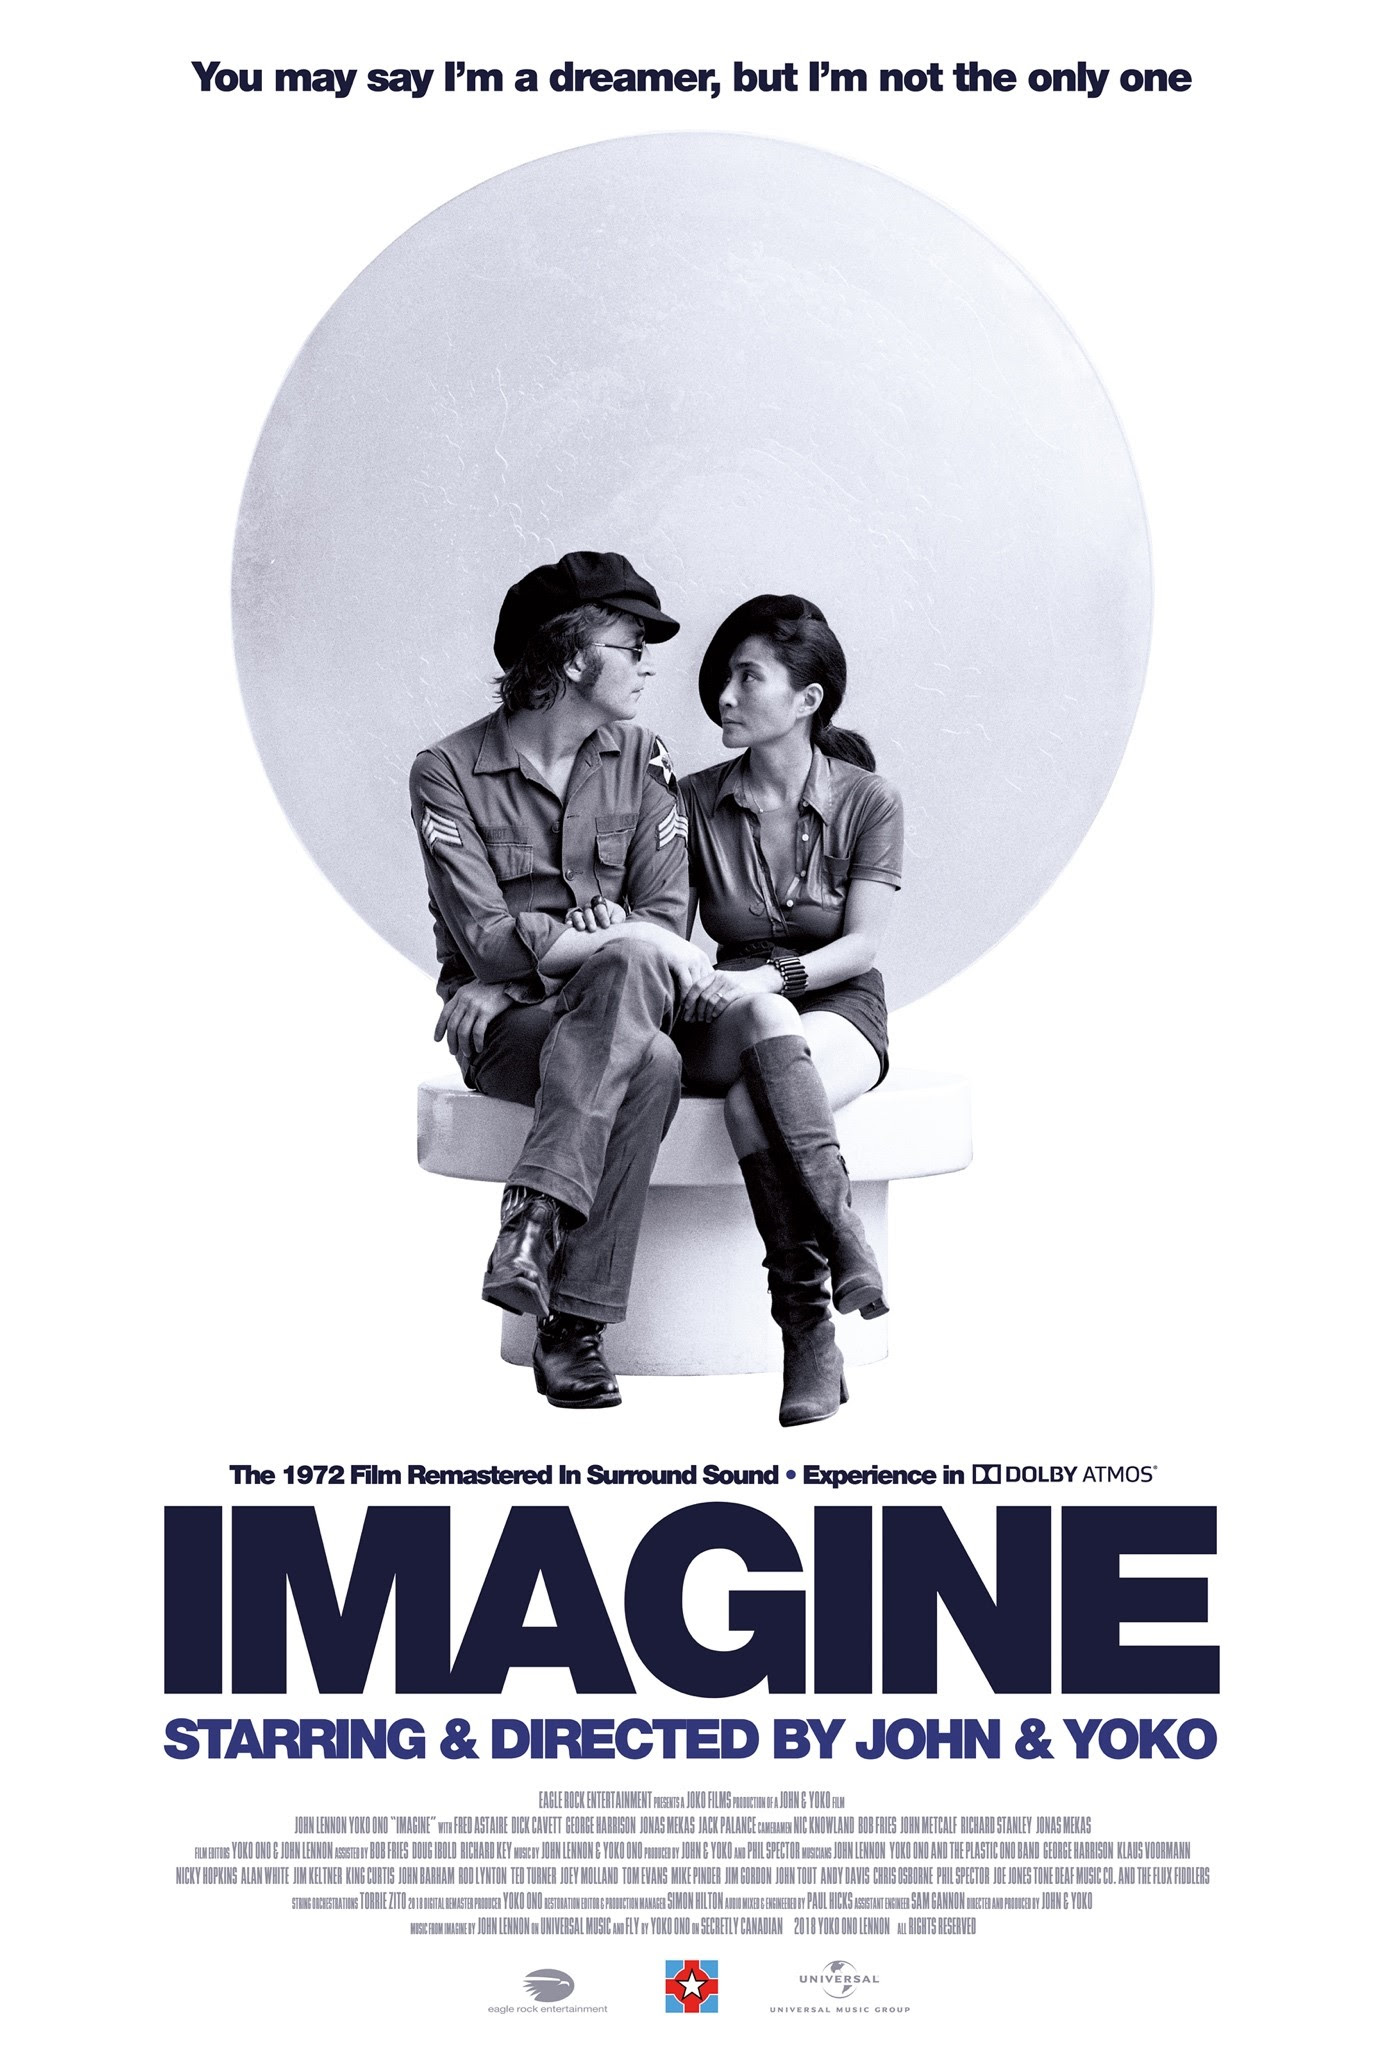 50th anniversary of John Lennon and Yoko Ono’s classic song “Imagine,”